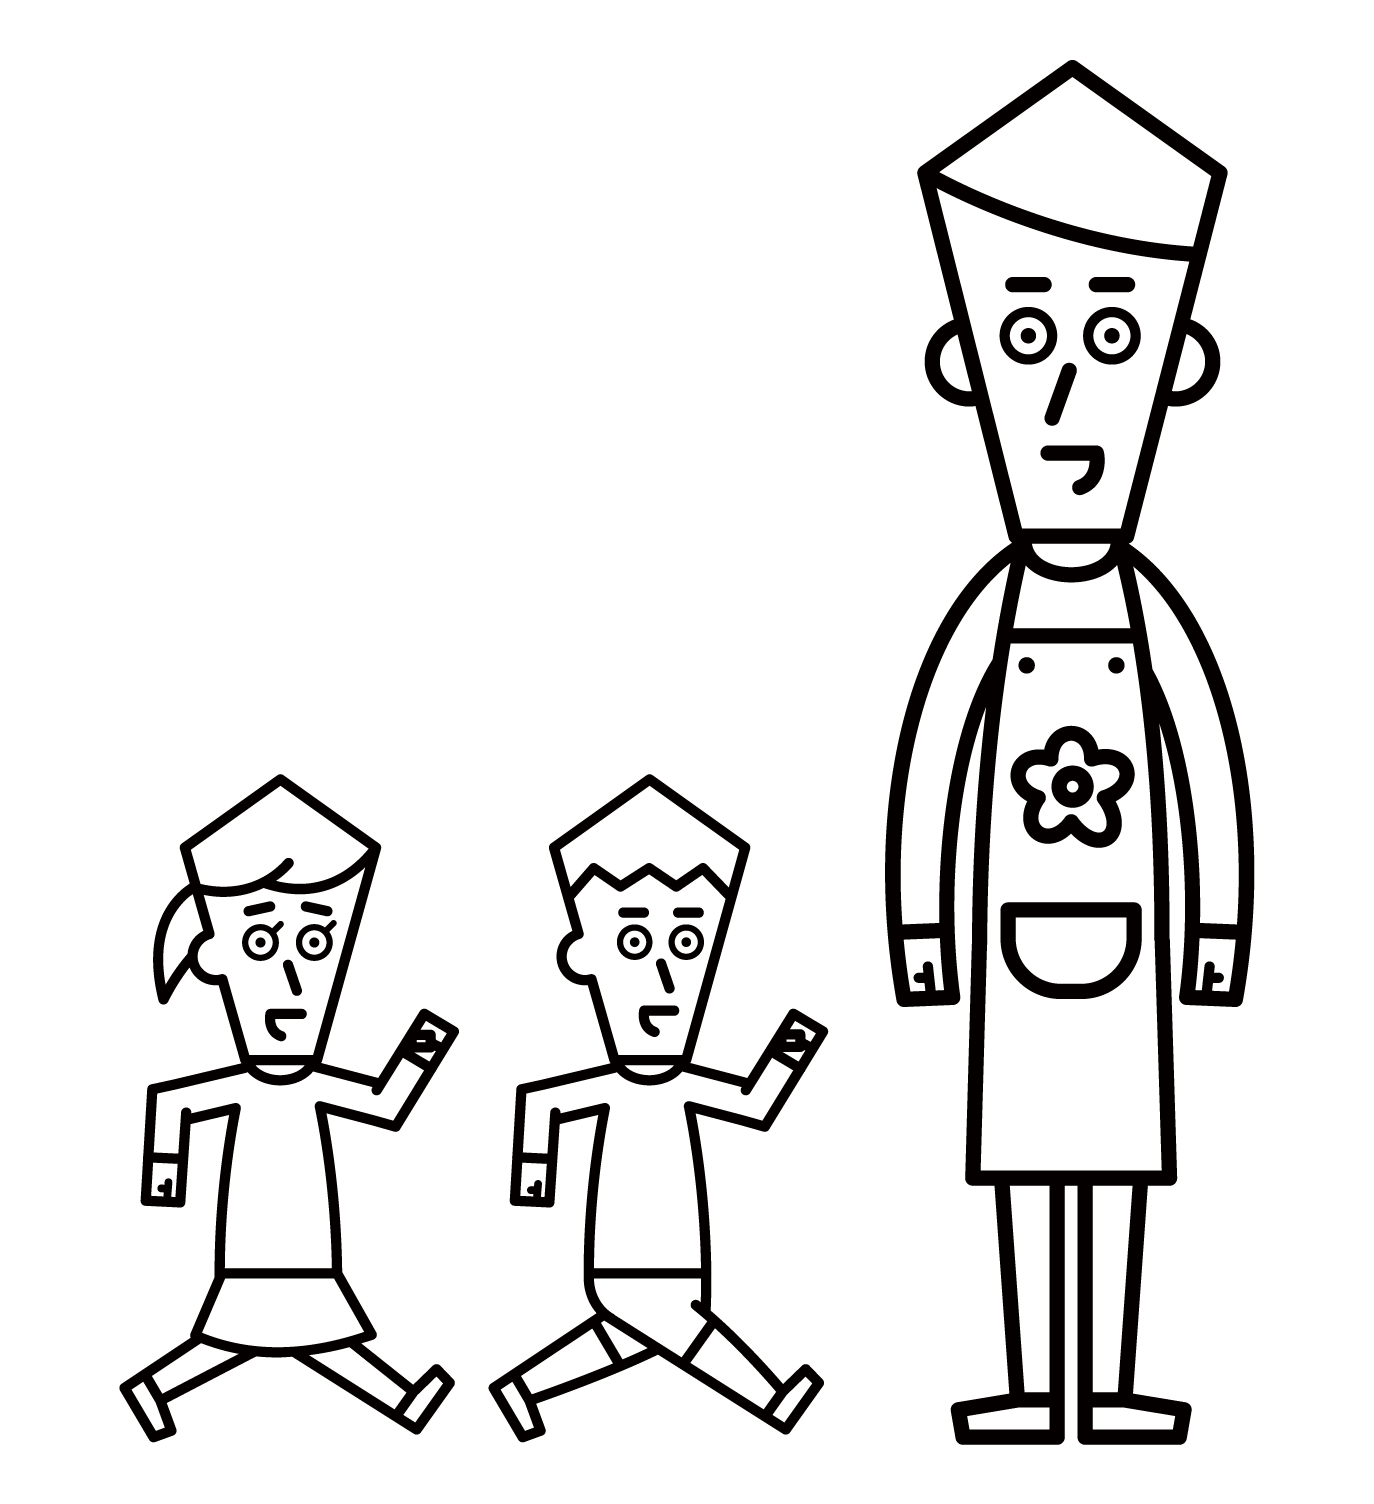 Illustration of a nursery teacher (male) watching over children